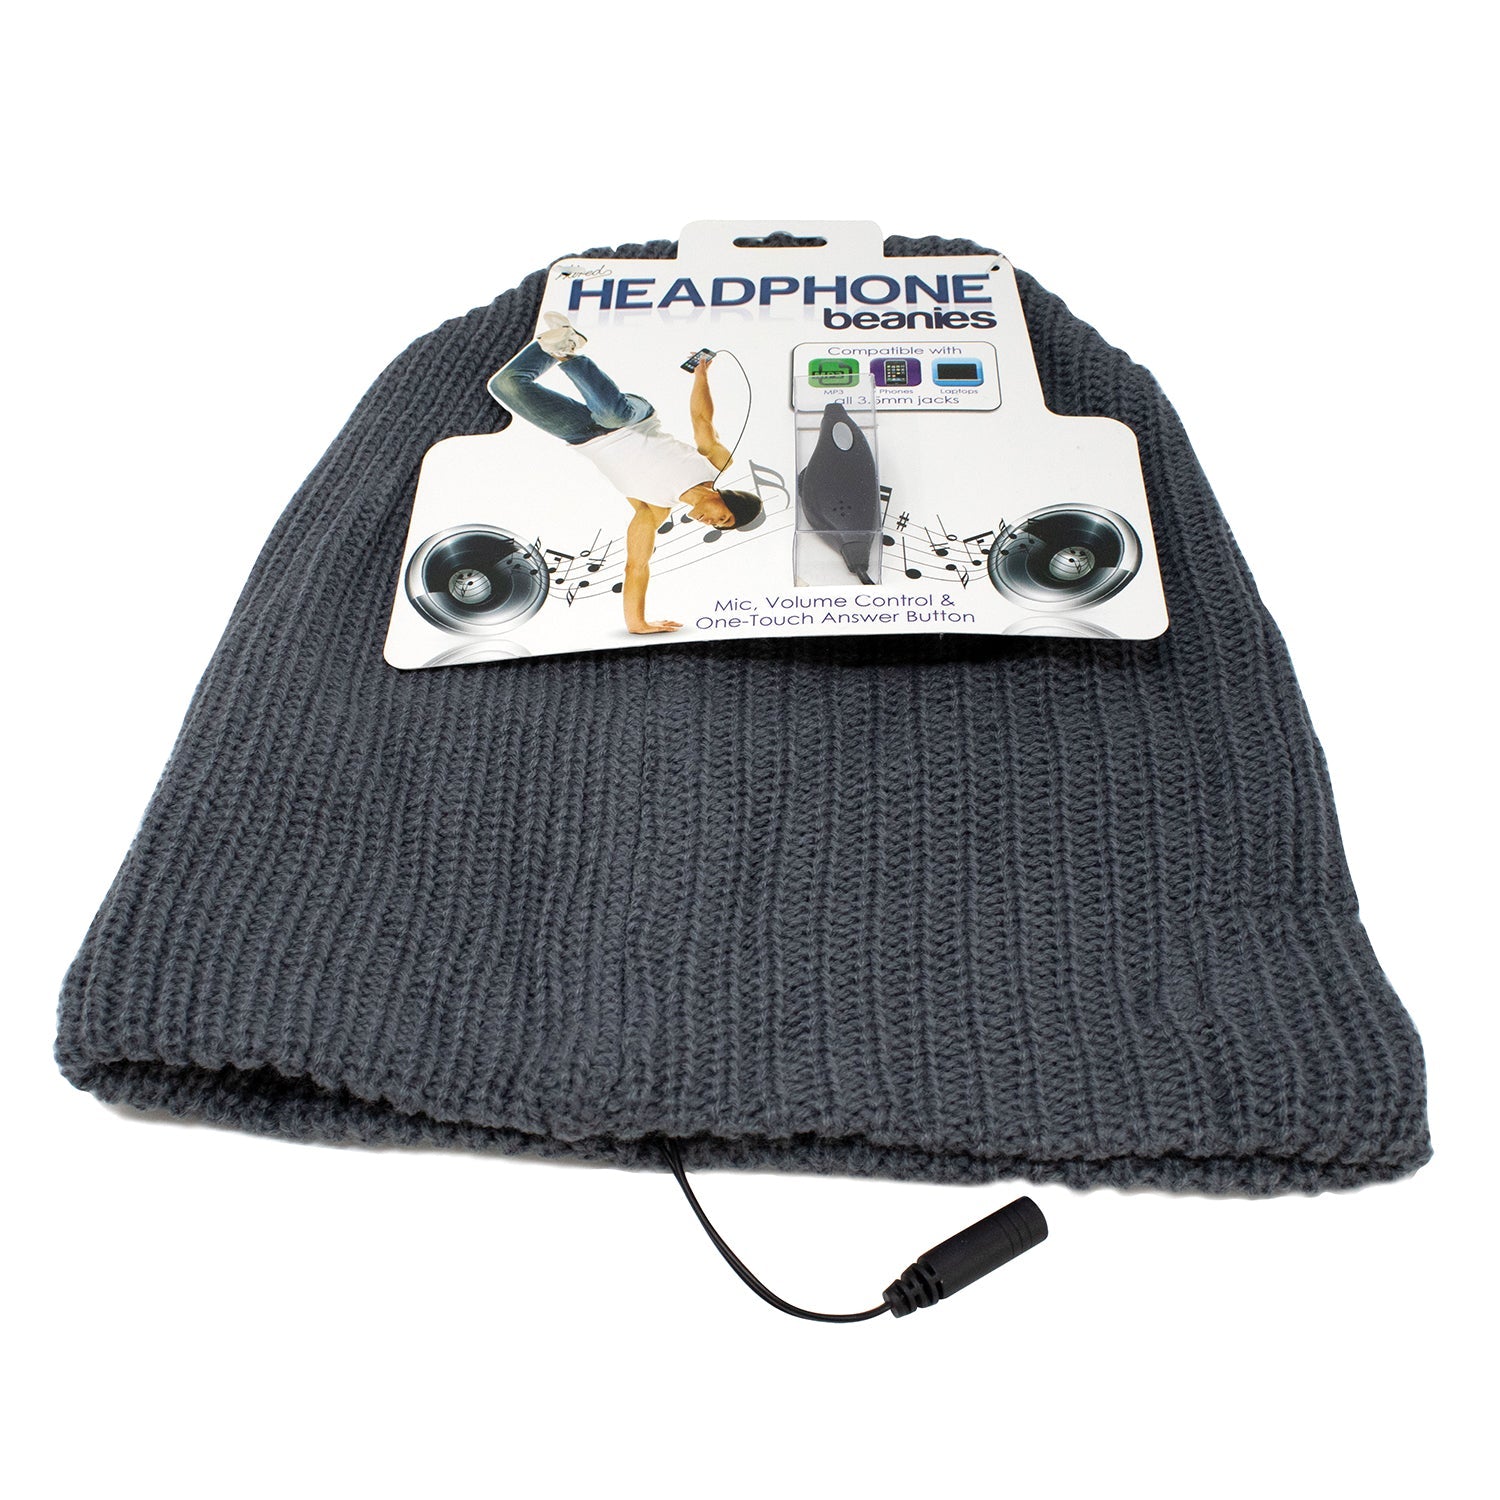 Slate gray knit Headphone Beanie caps with headphone jack and comfortable, hidden speakers. 